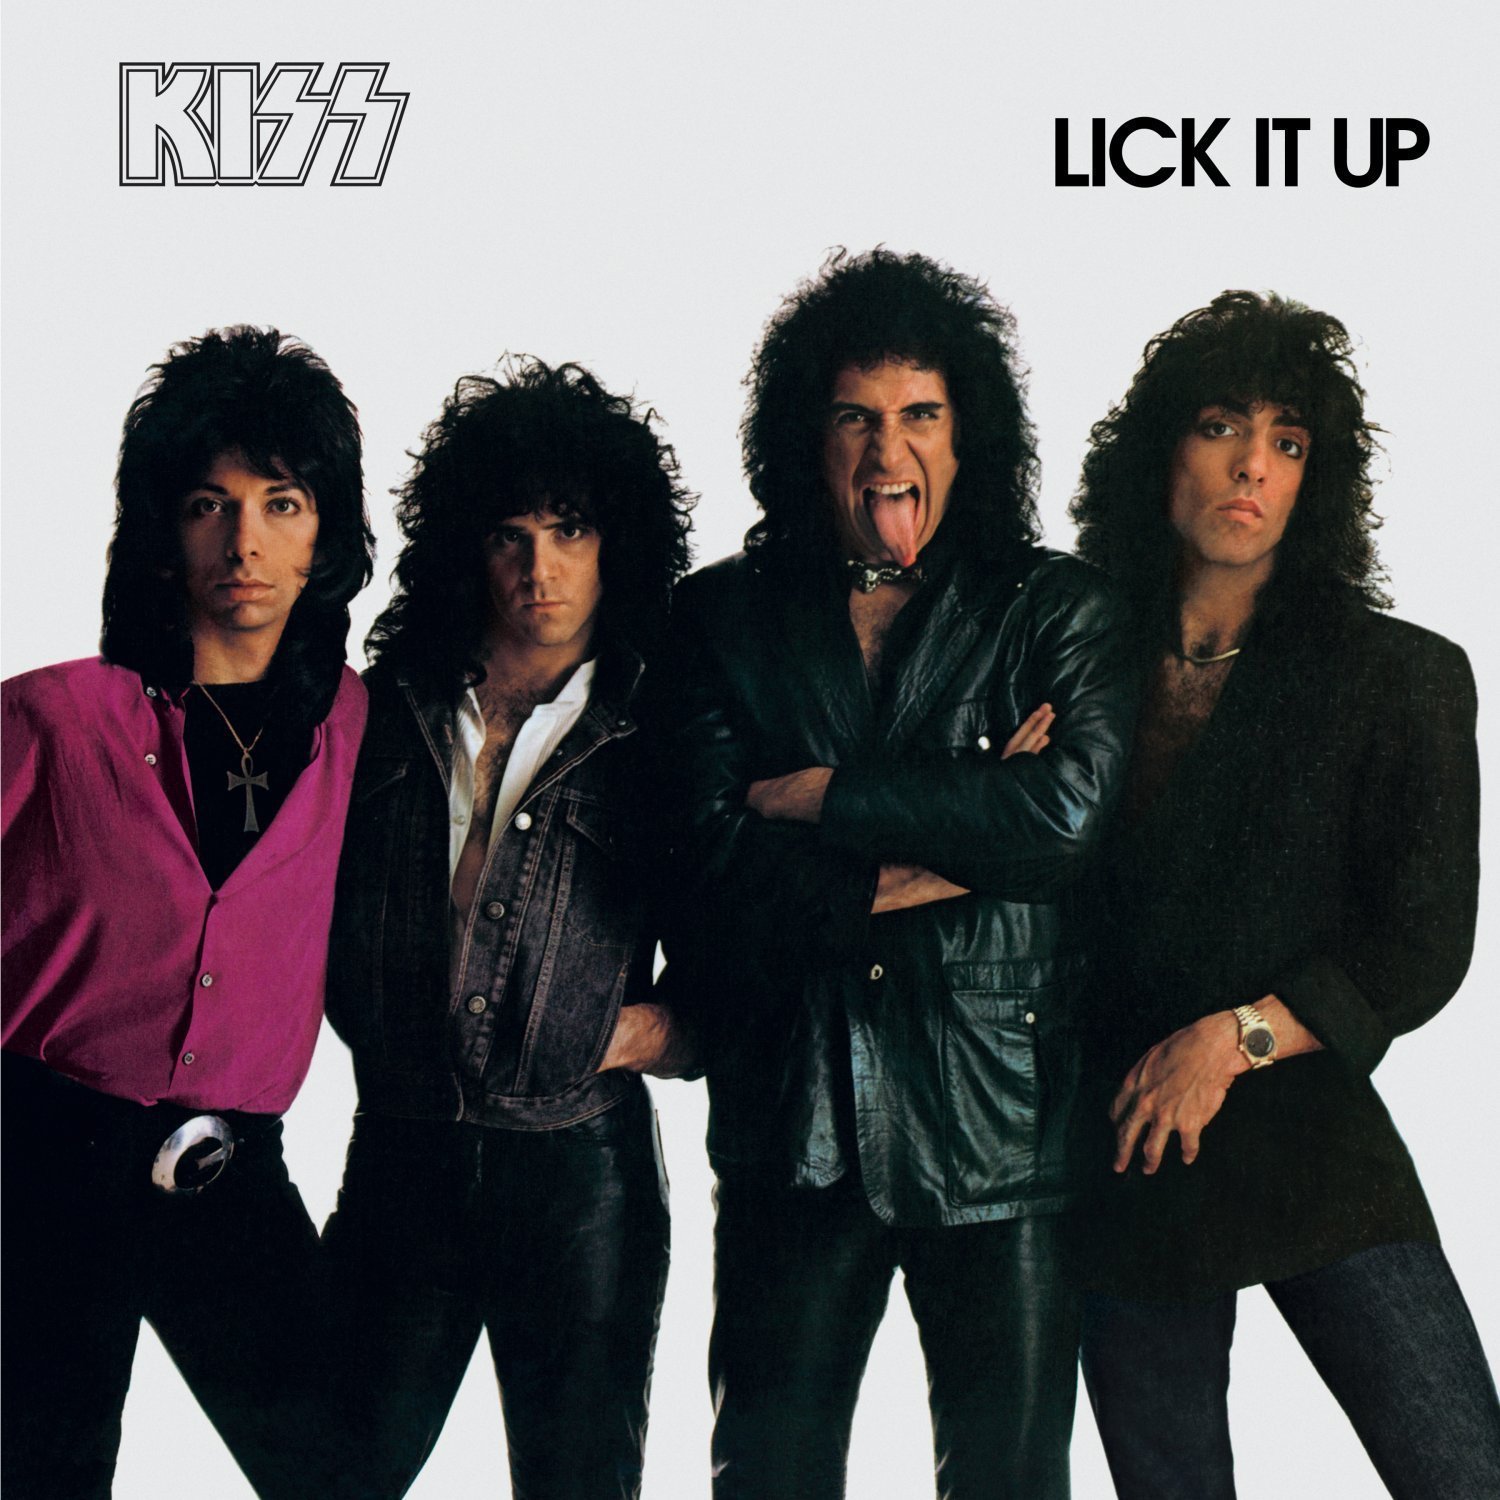 Art for Lick It Up (1983) by KIϟϟ